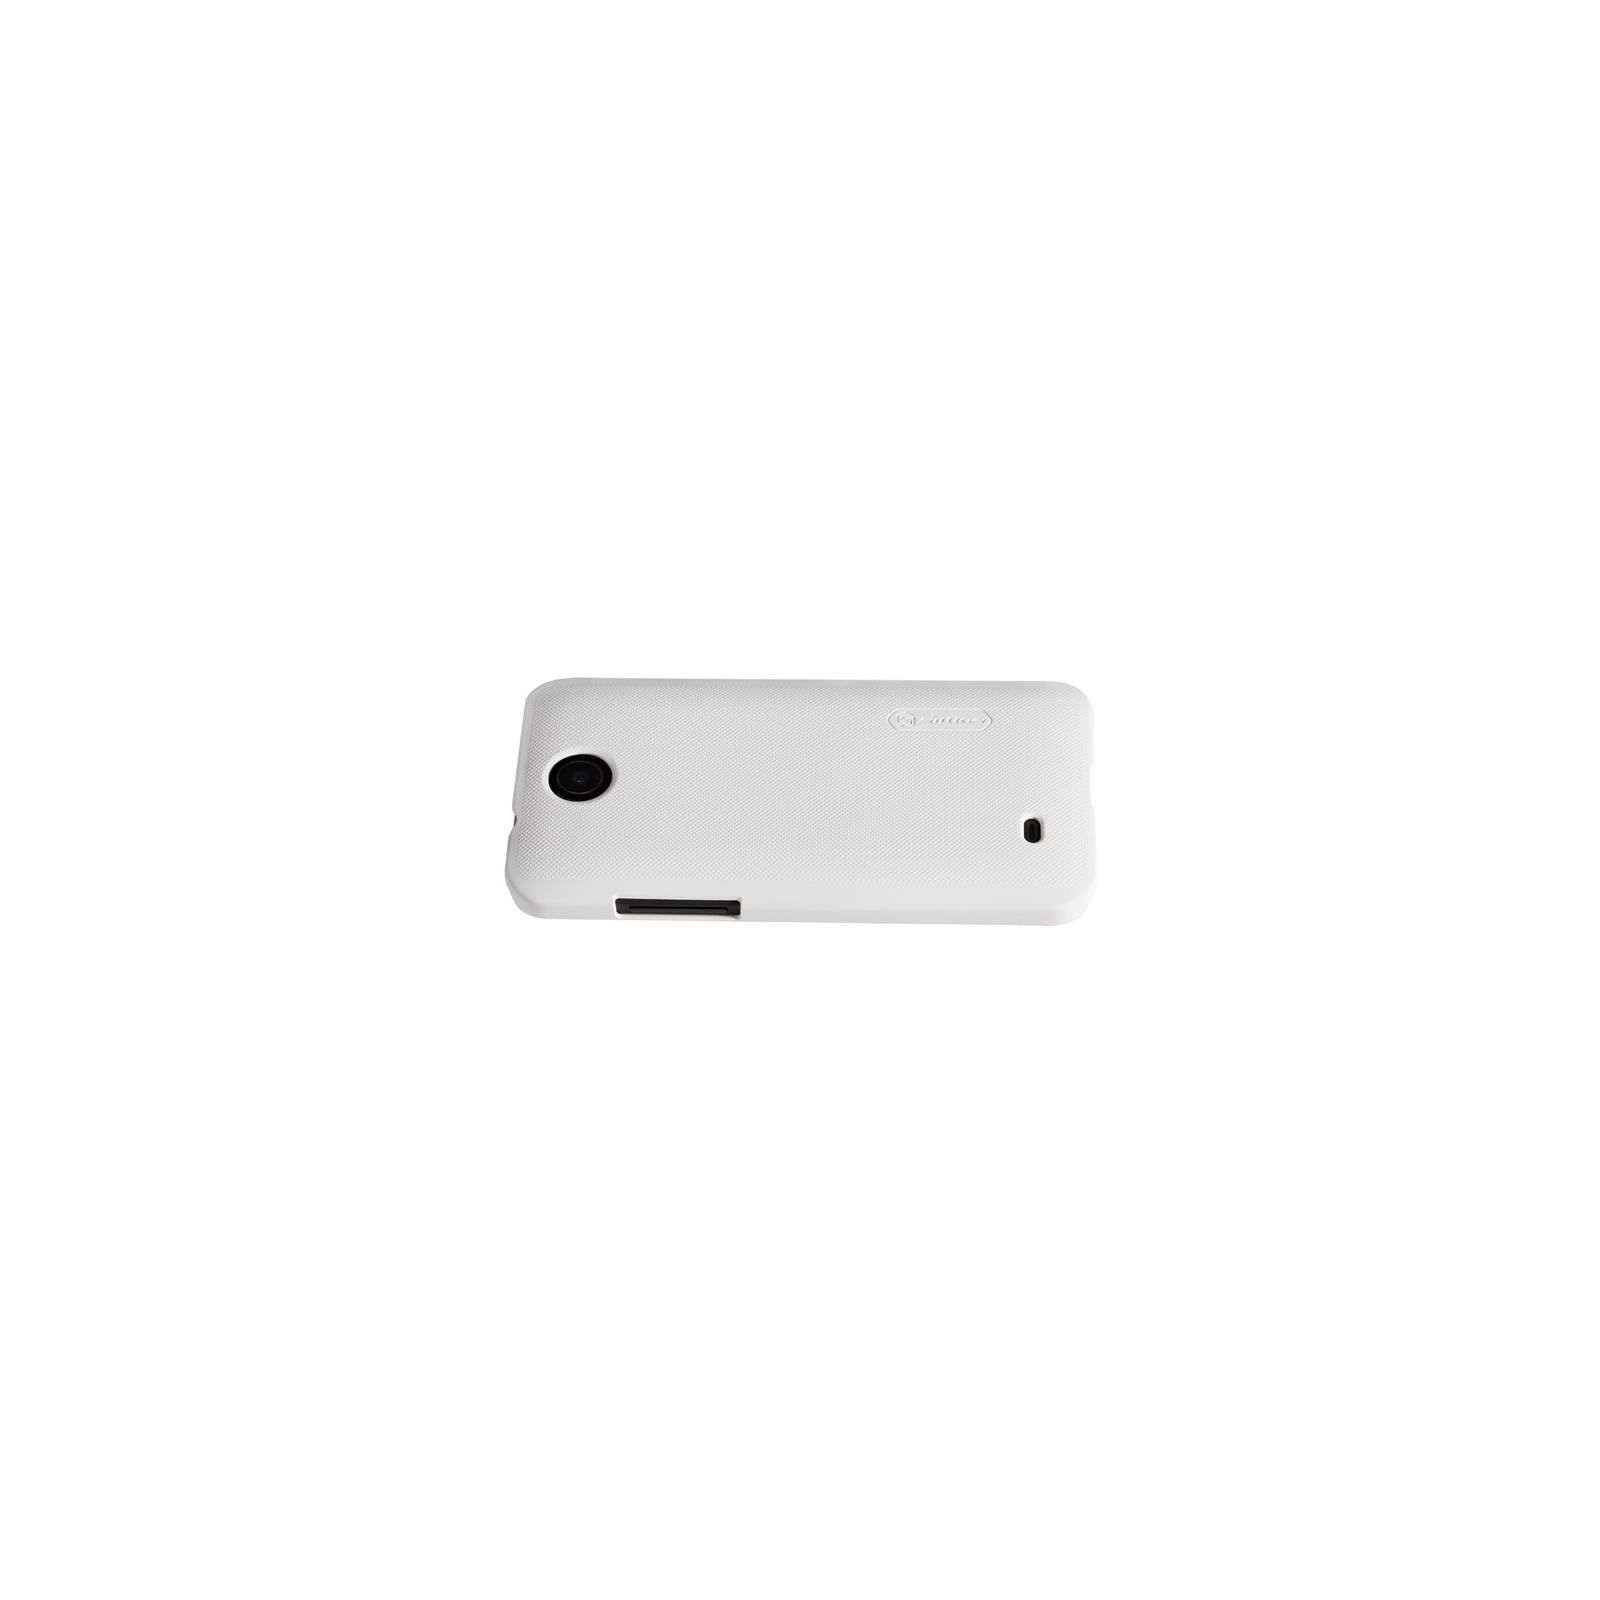 Чехол для мобильного телефона Nillkin для HTC Desire 300 /Super Frosted Shield/White (6100791) изображение 3